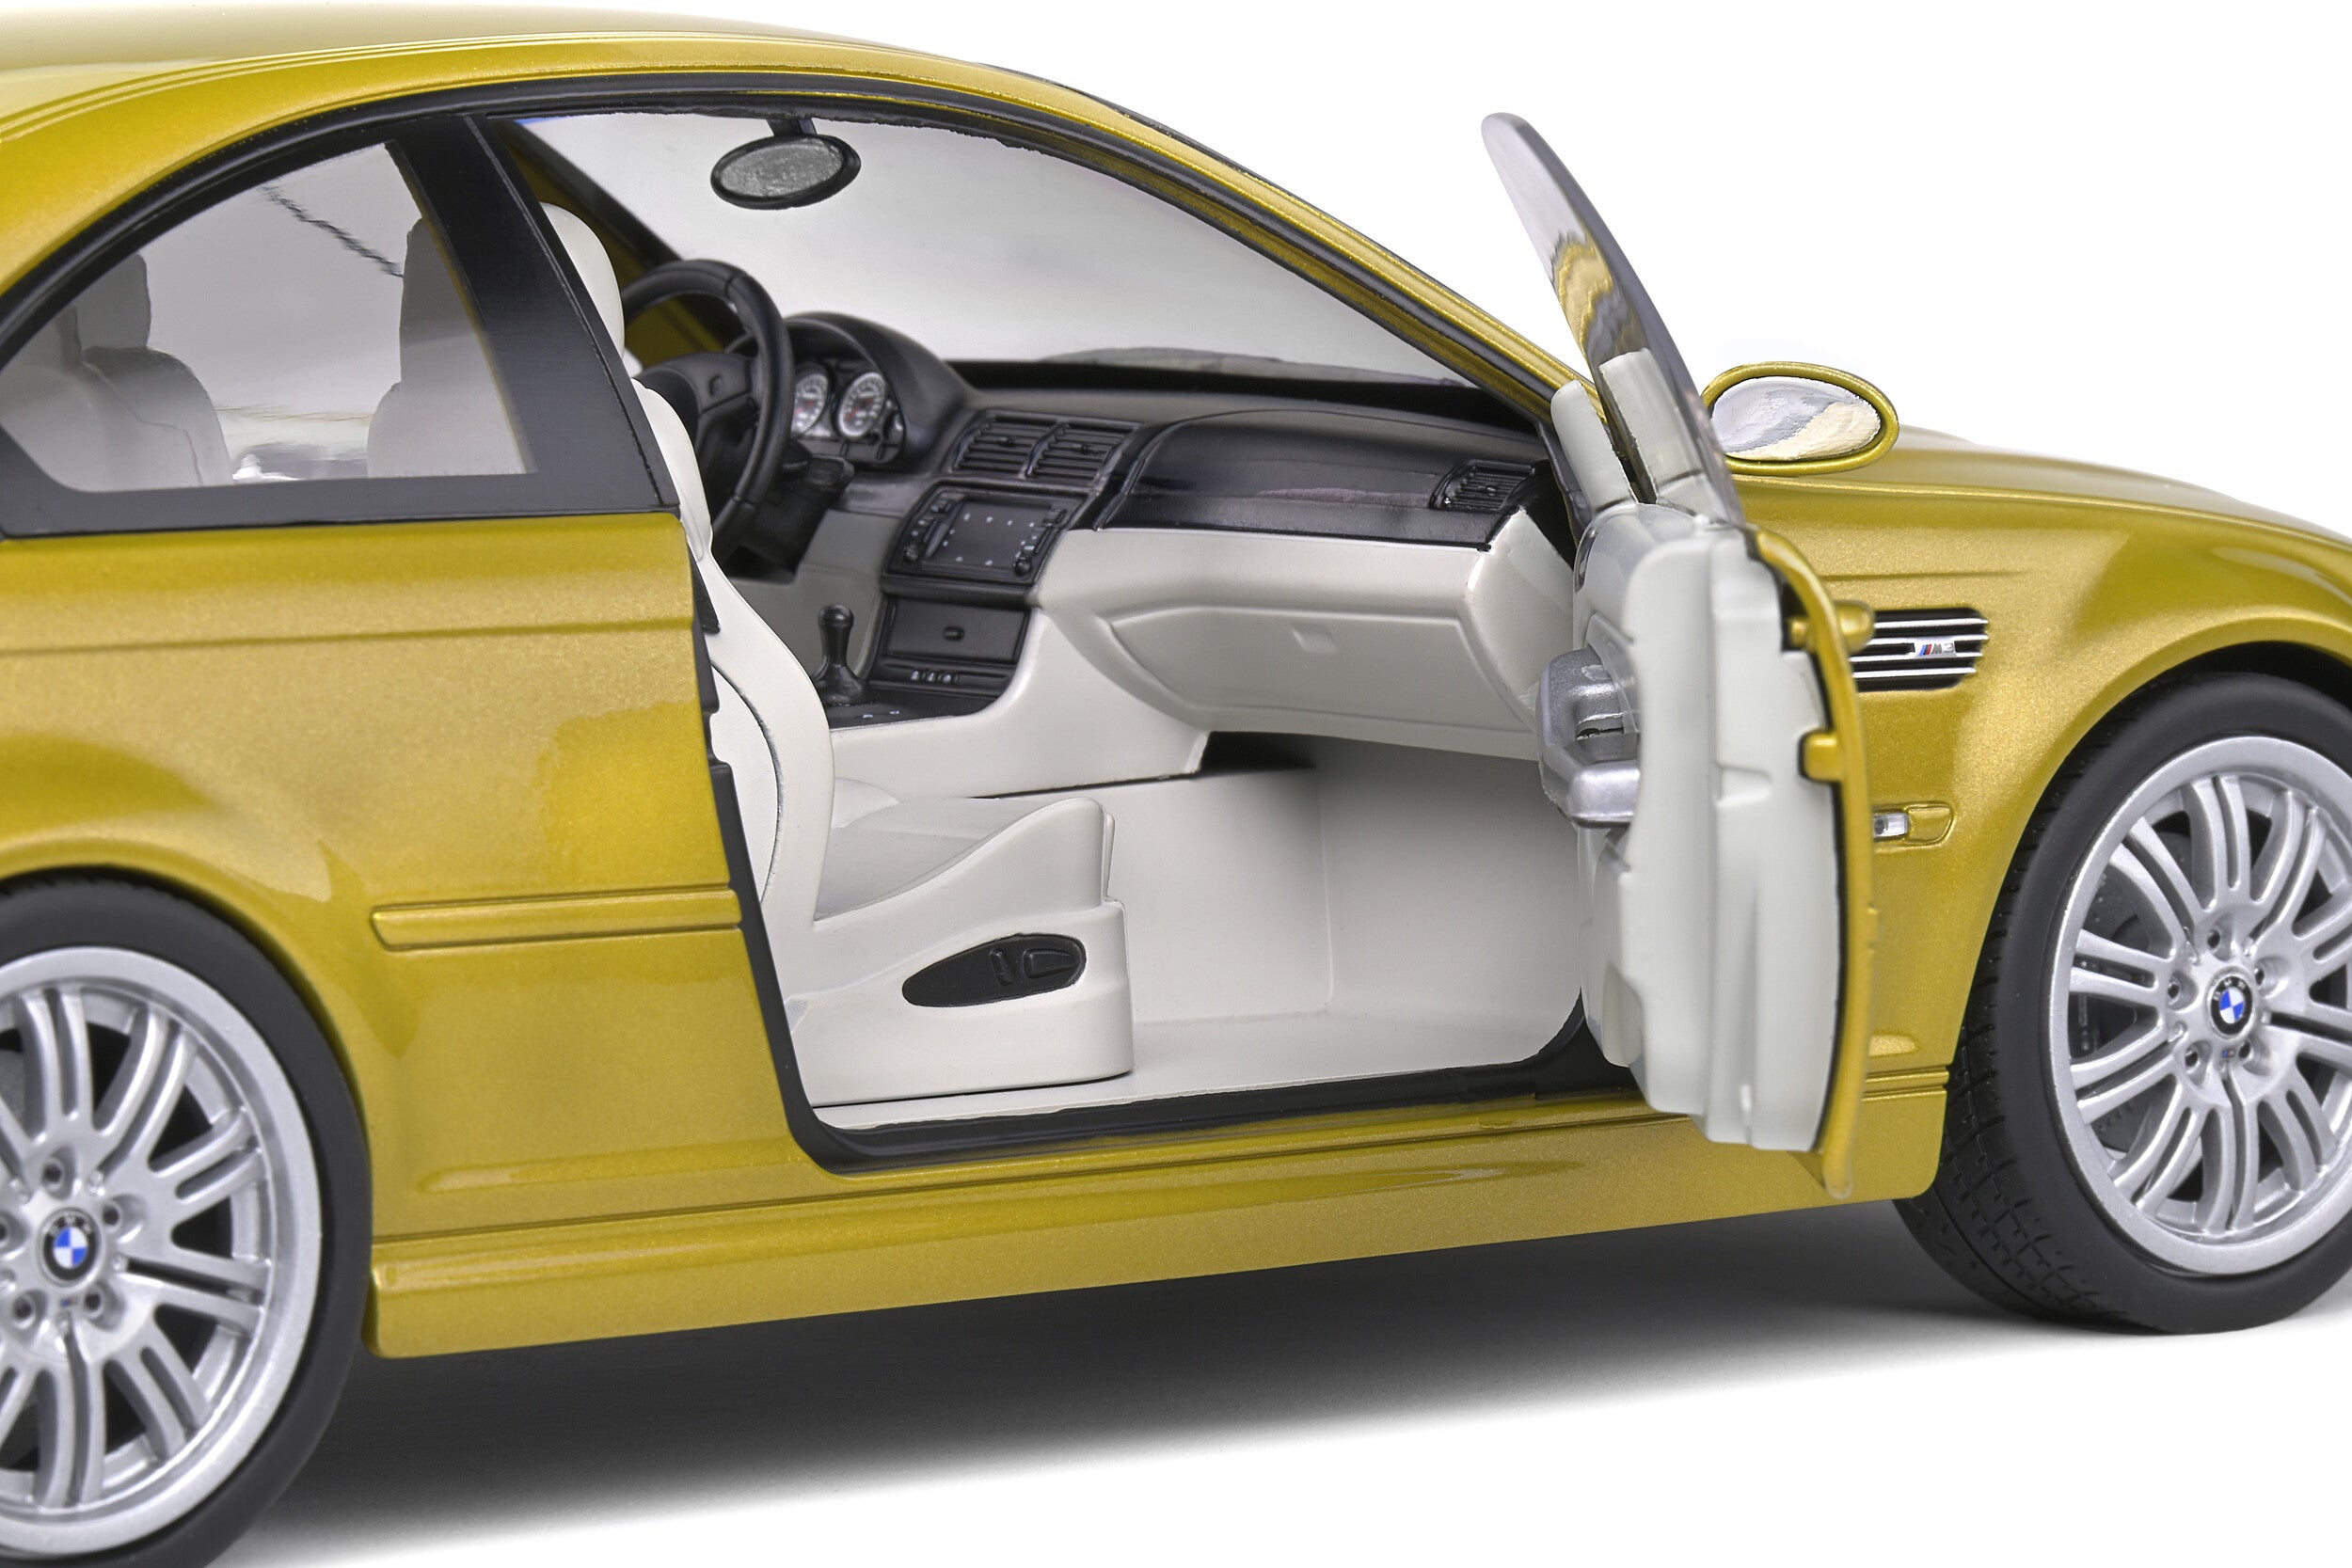 Solido - BMW M3 Coupe (E46) (Phoenix Yellow) 1:18 Scale Model Car